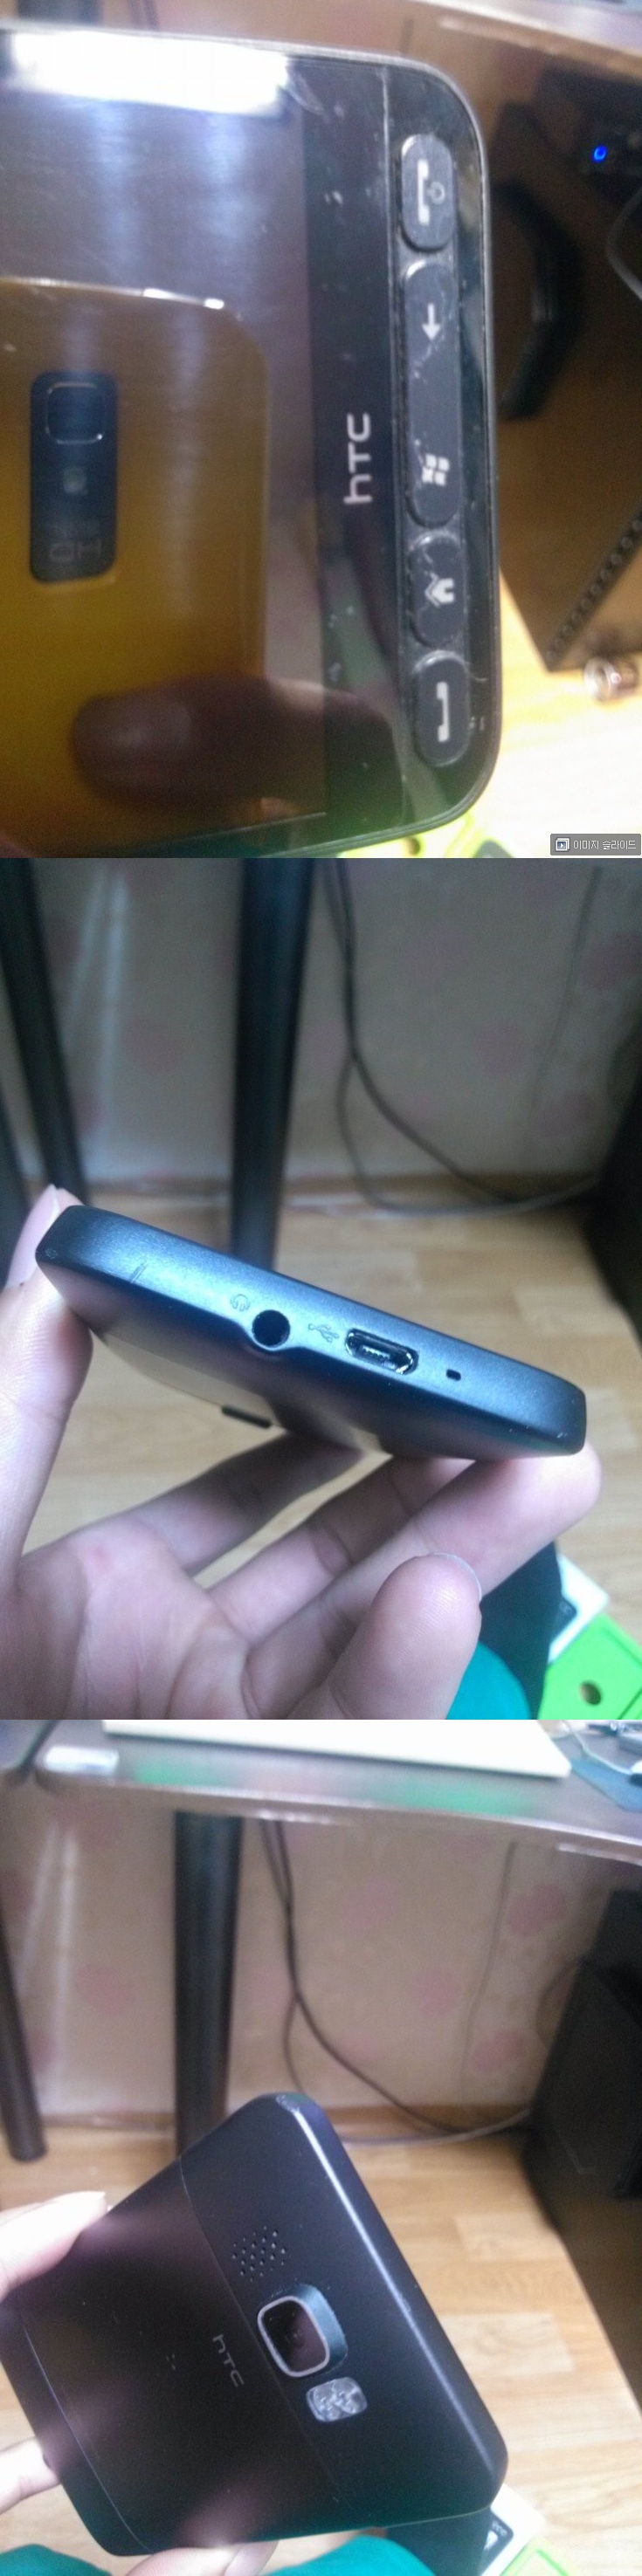 2.jpg : HTC HD2 공기기 팝니다.